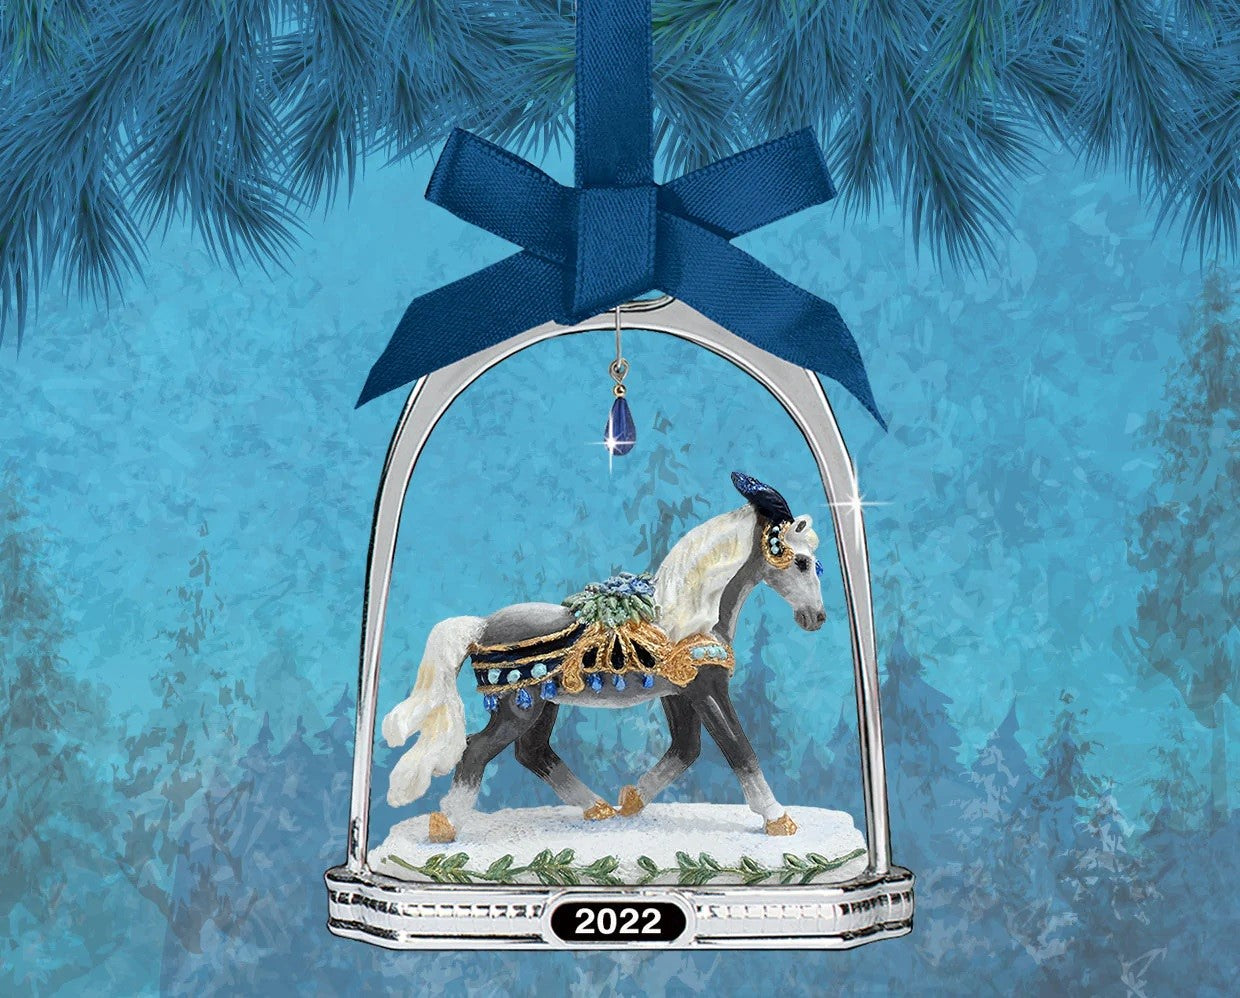 2023 Breyer Holiday Horse, Highlander - Everything Equine